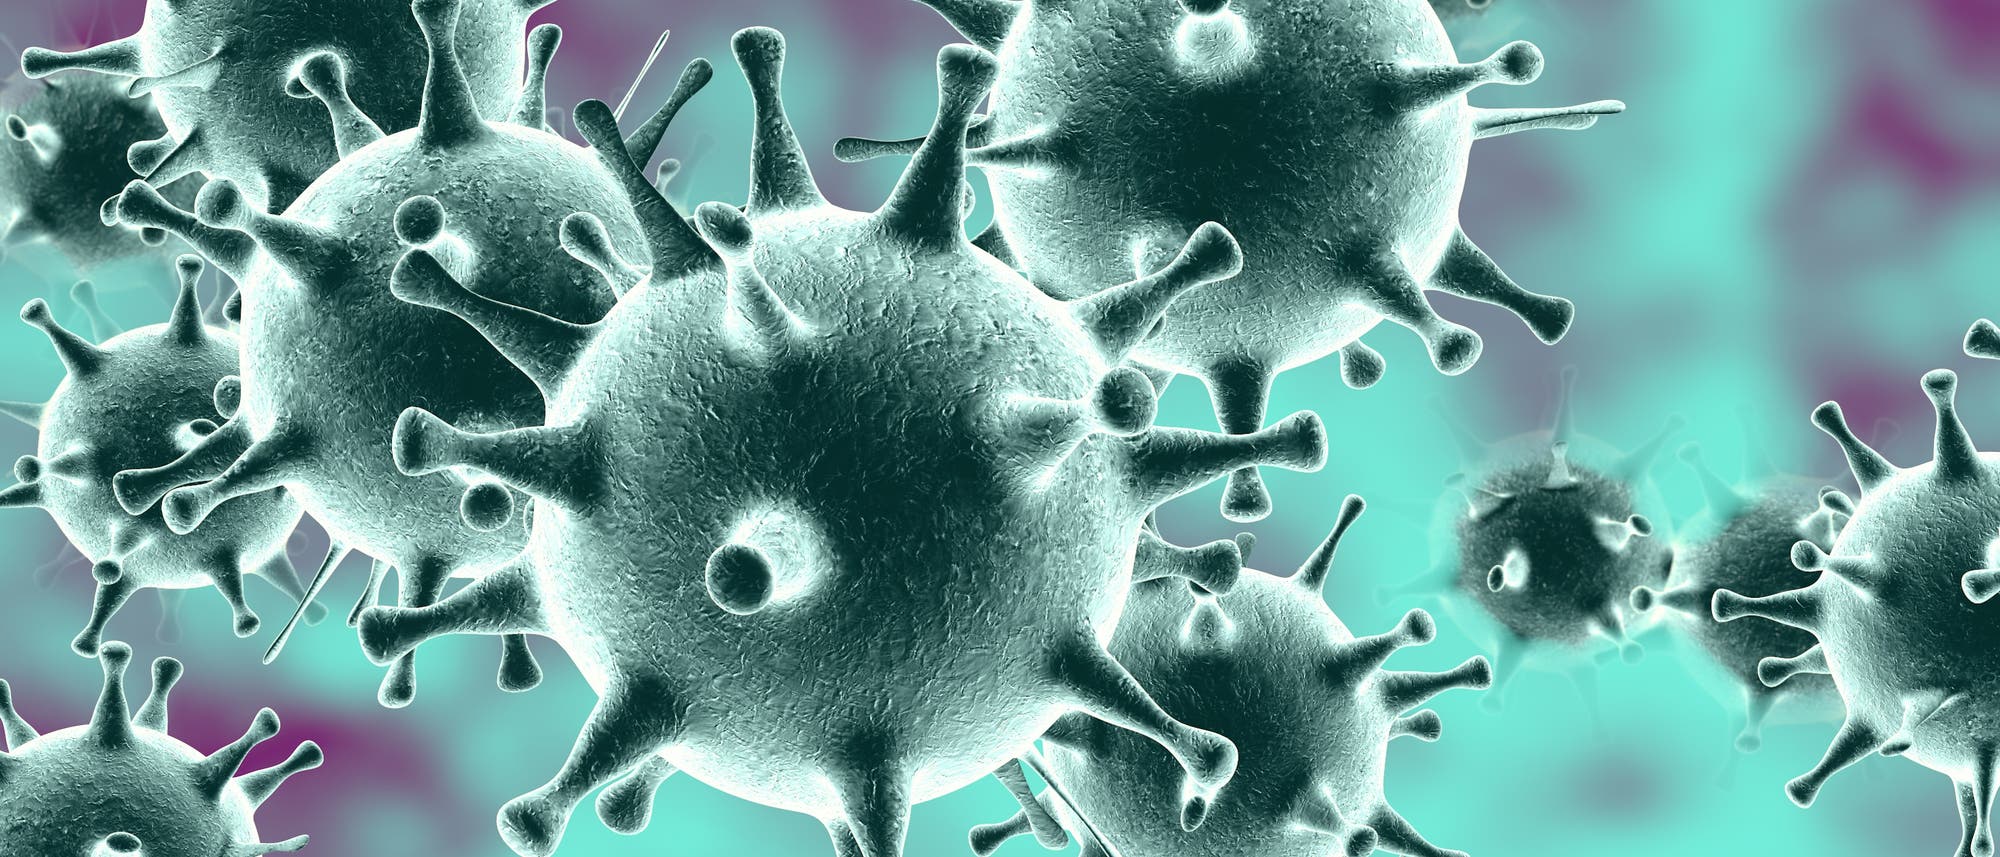 Farbige fotorealistische Illustration eines MERS-Coronavirus